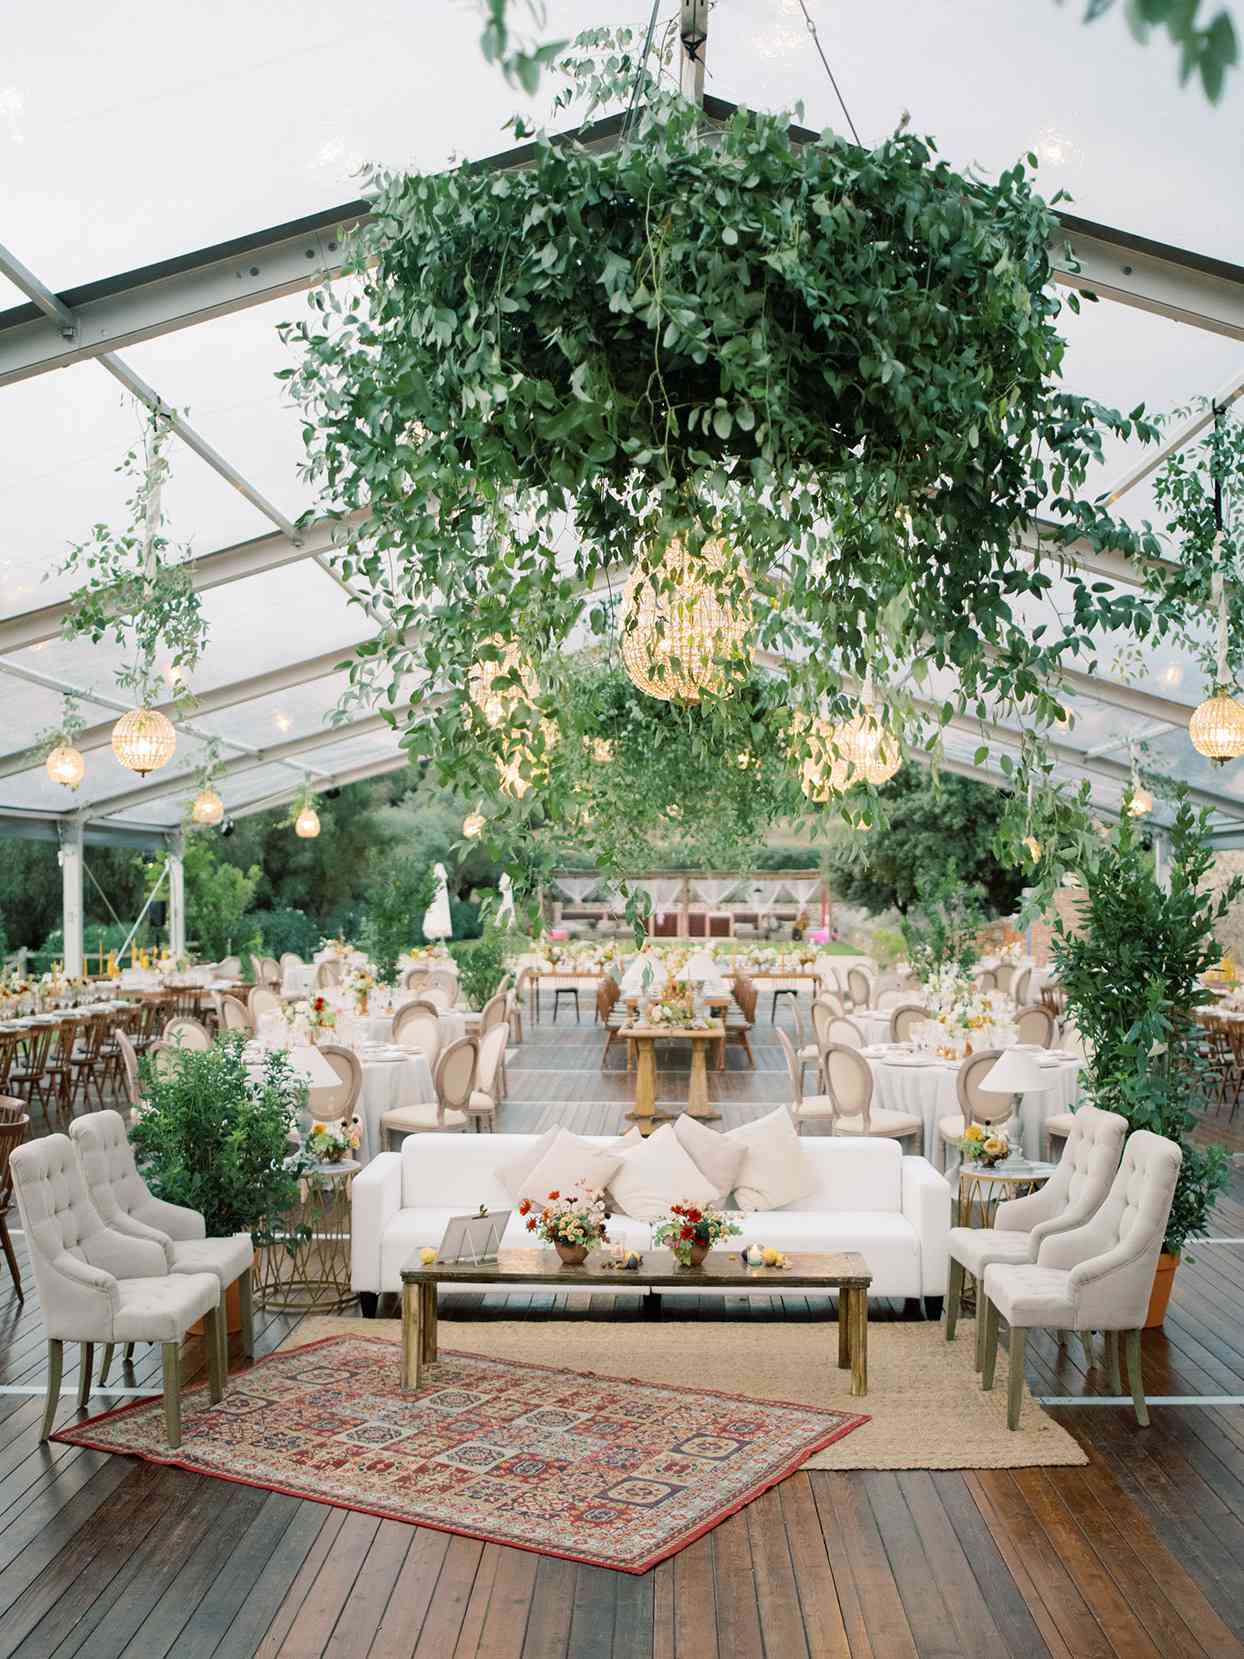 alyssa macia wedding reception elegant lounge area and eating tables inside tent